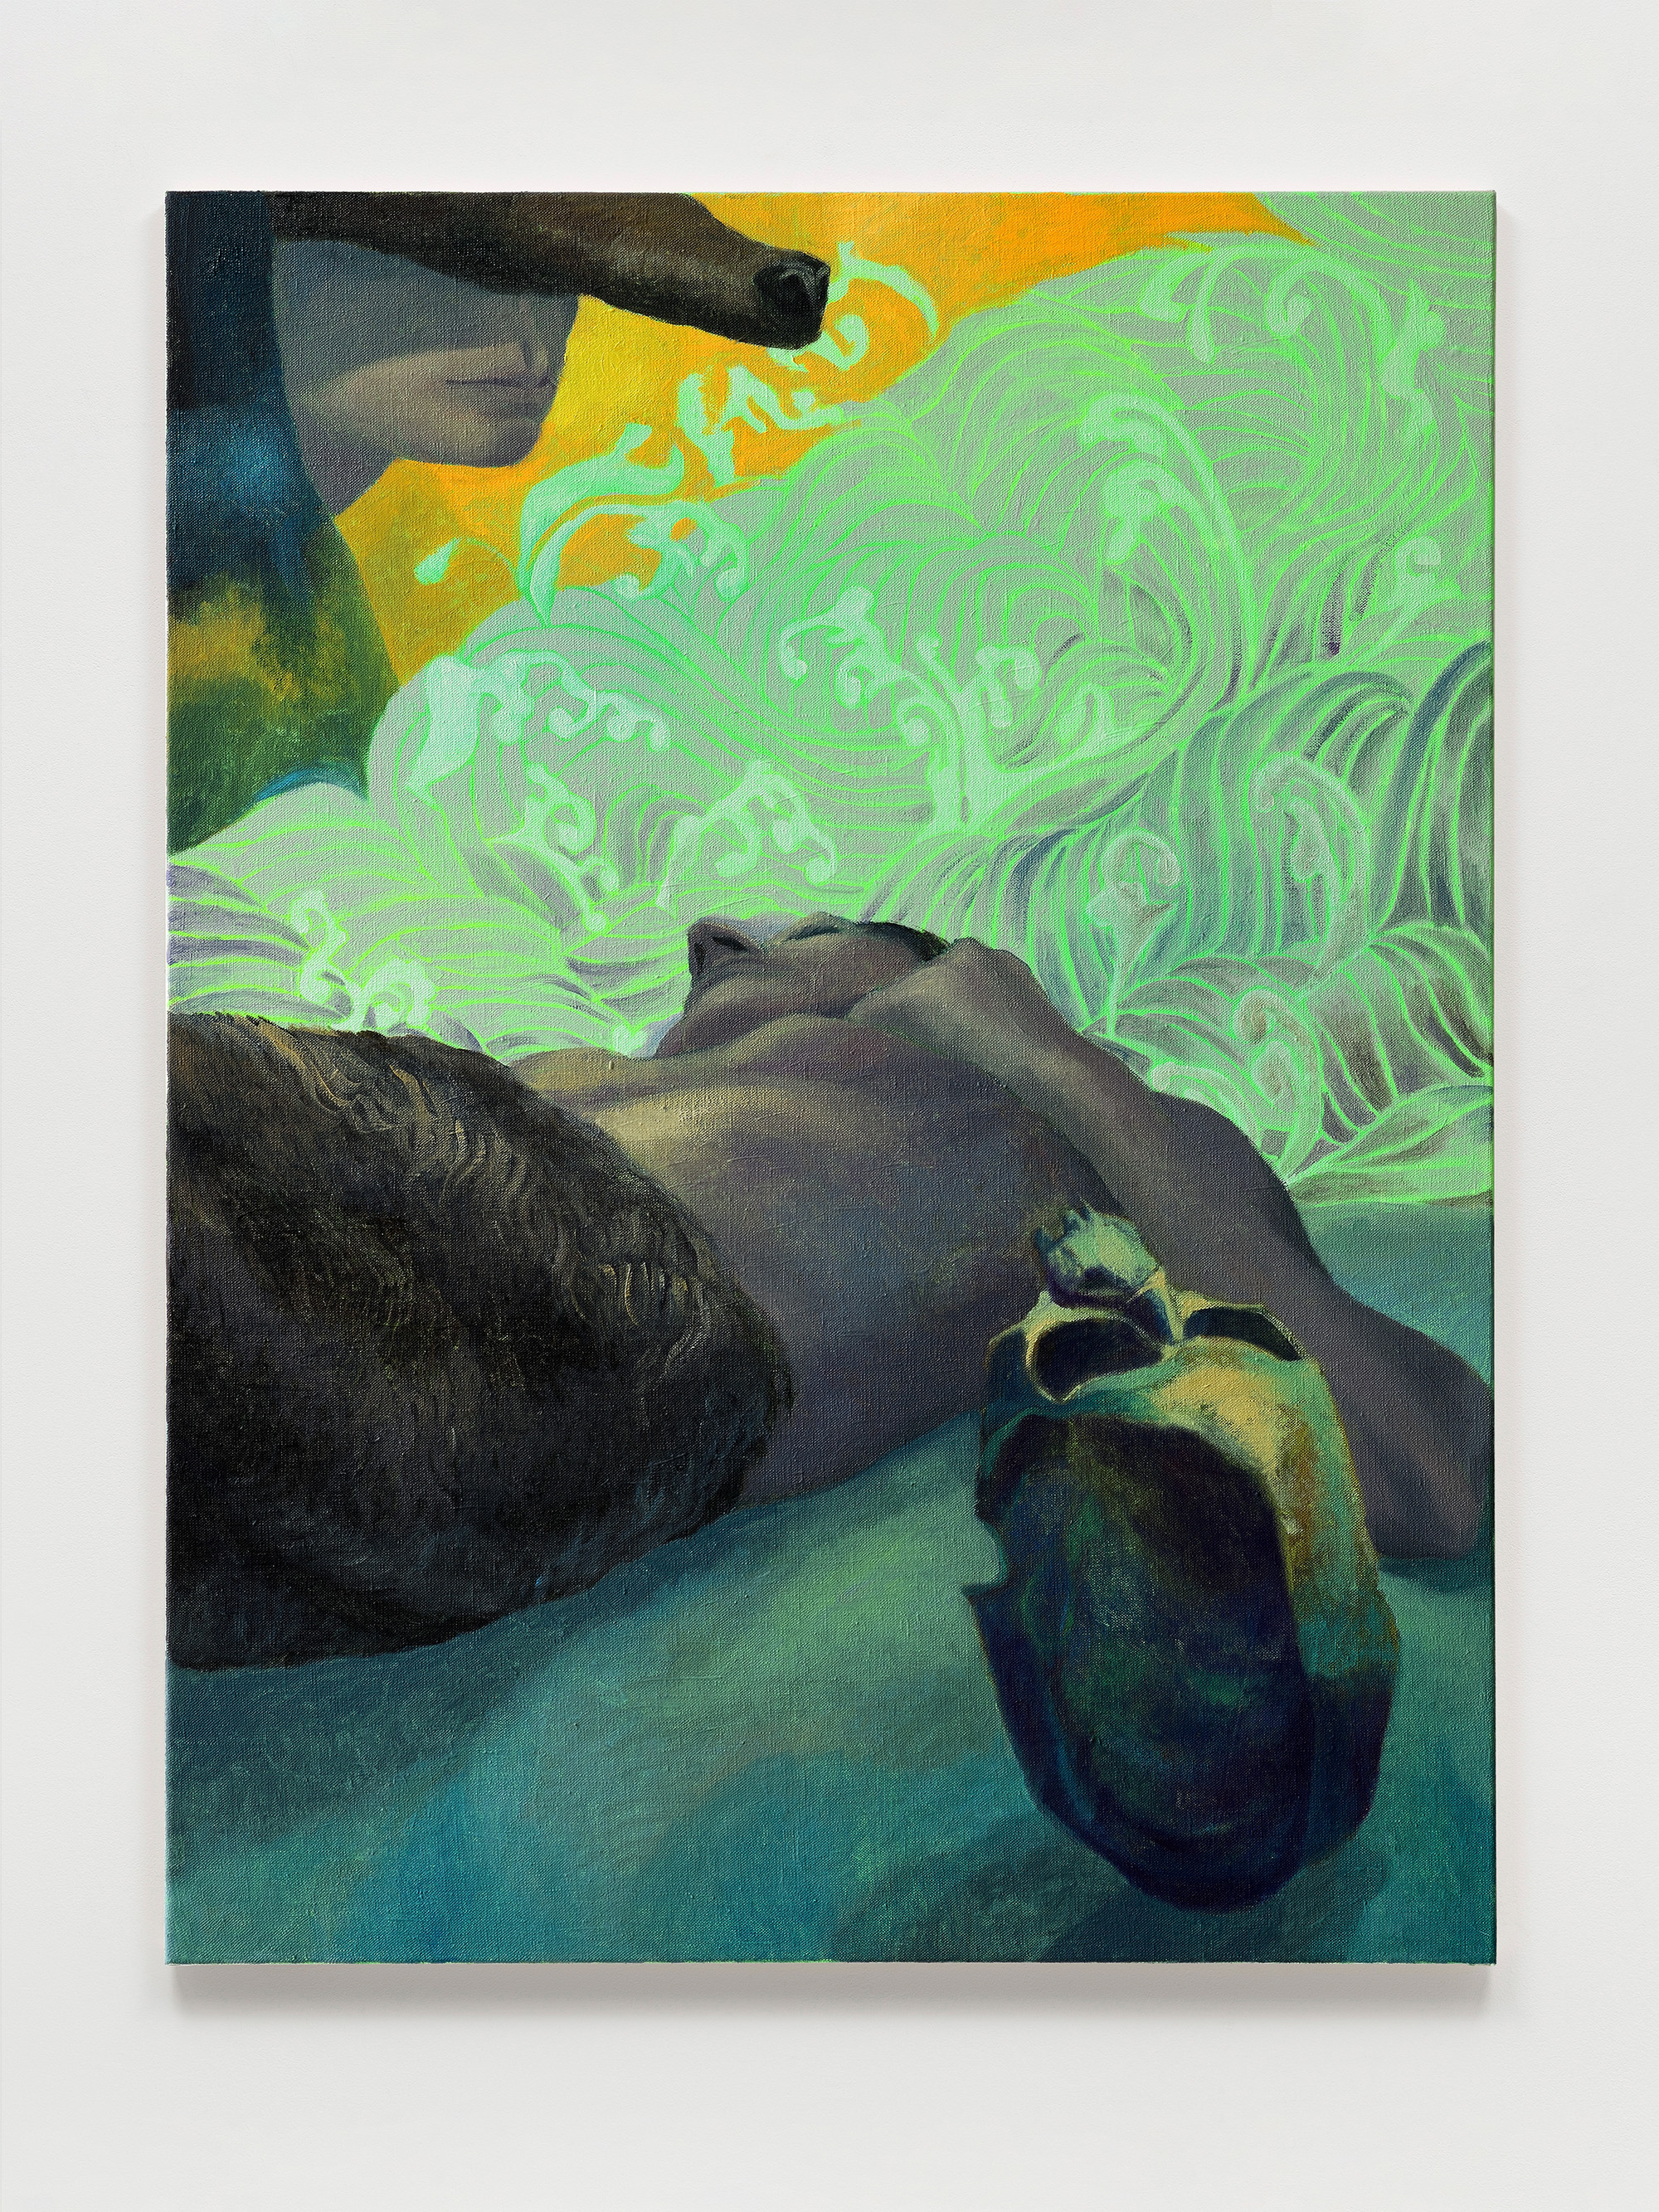 Alessandro Fogo, The Satyr’s dream, 2022, Oil on linen, 80 x 60 cm, 31 1/2 x 23 5/8 in.